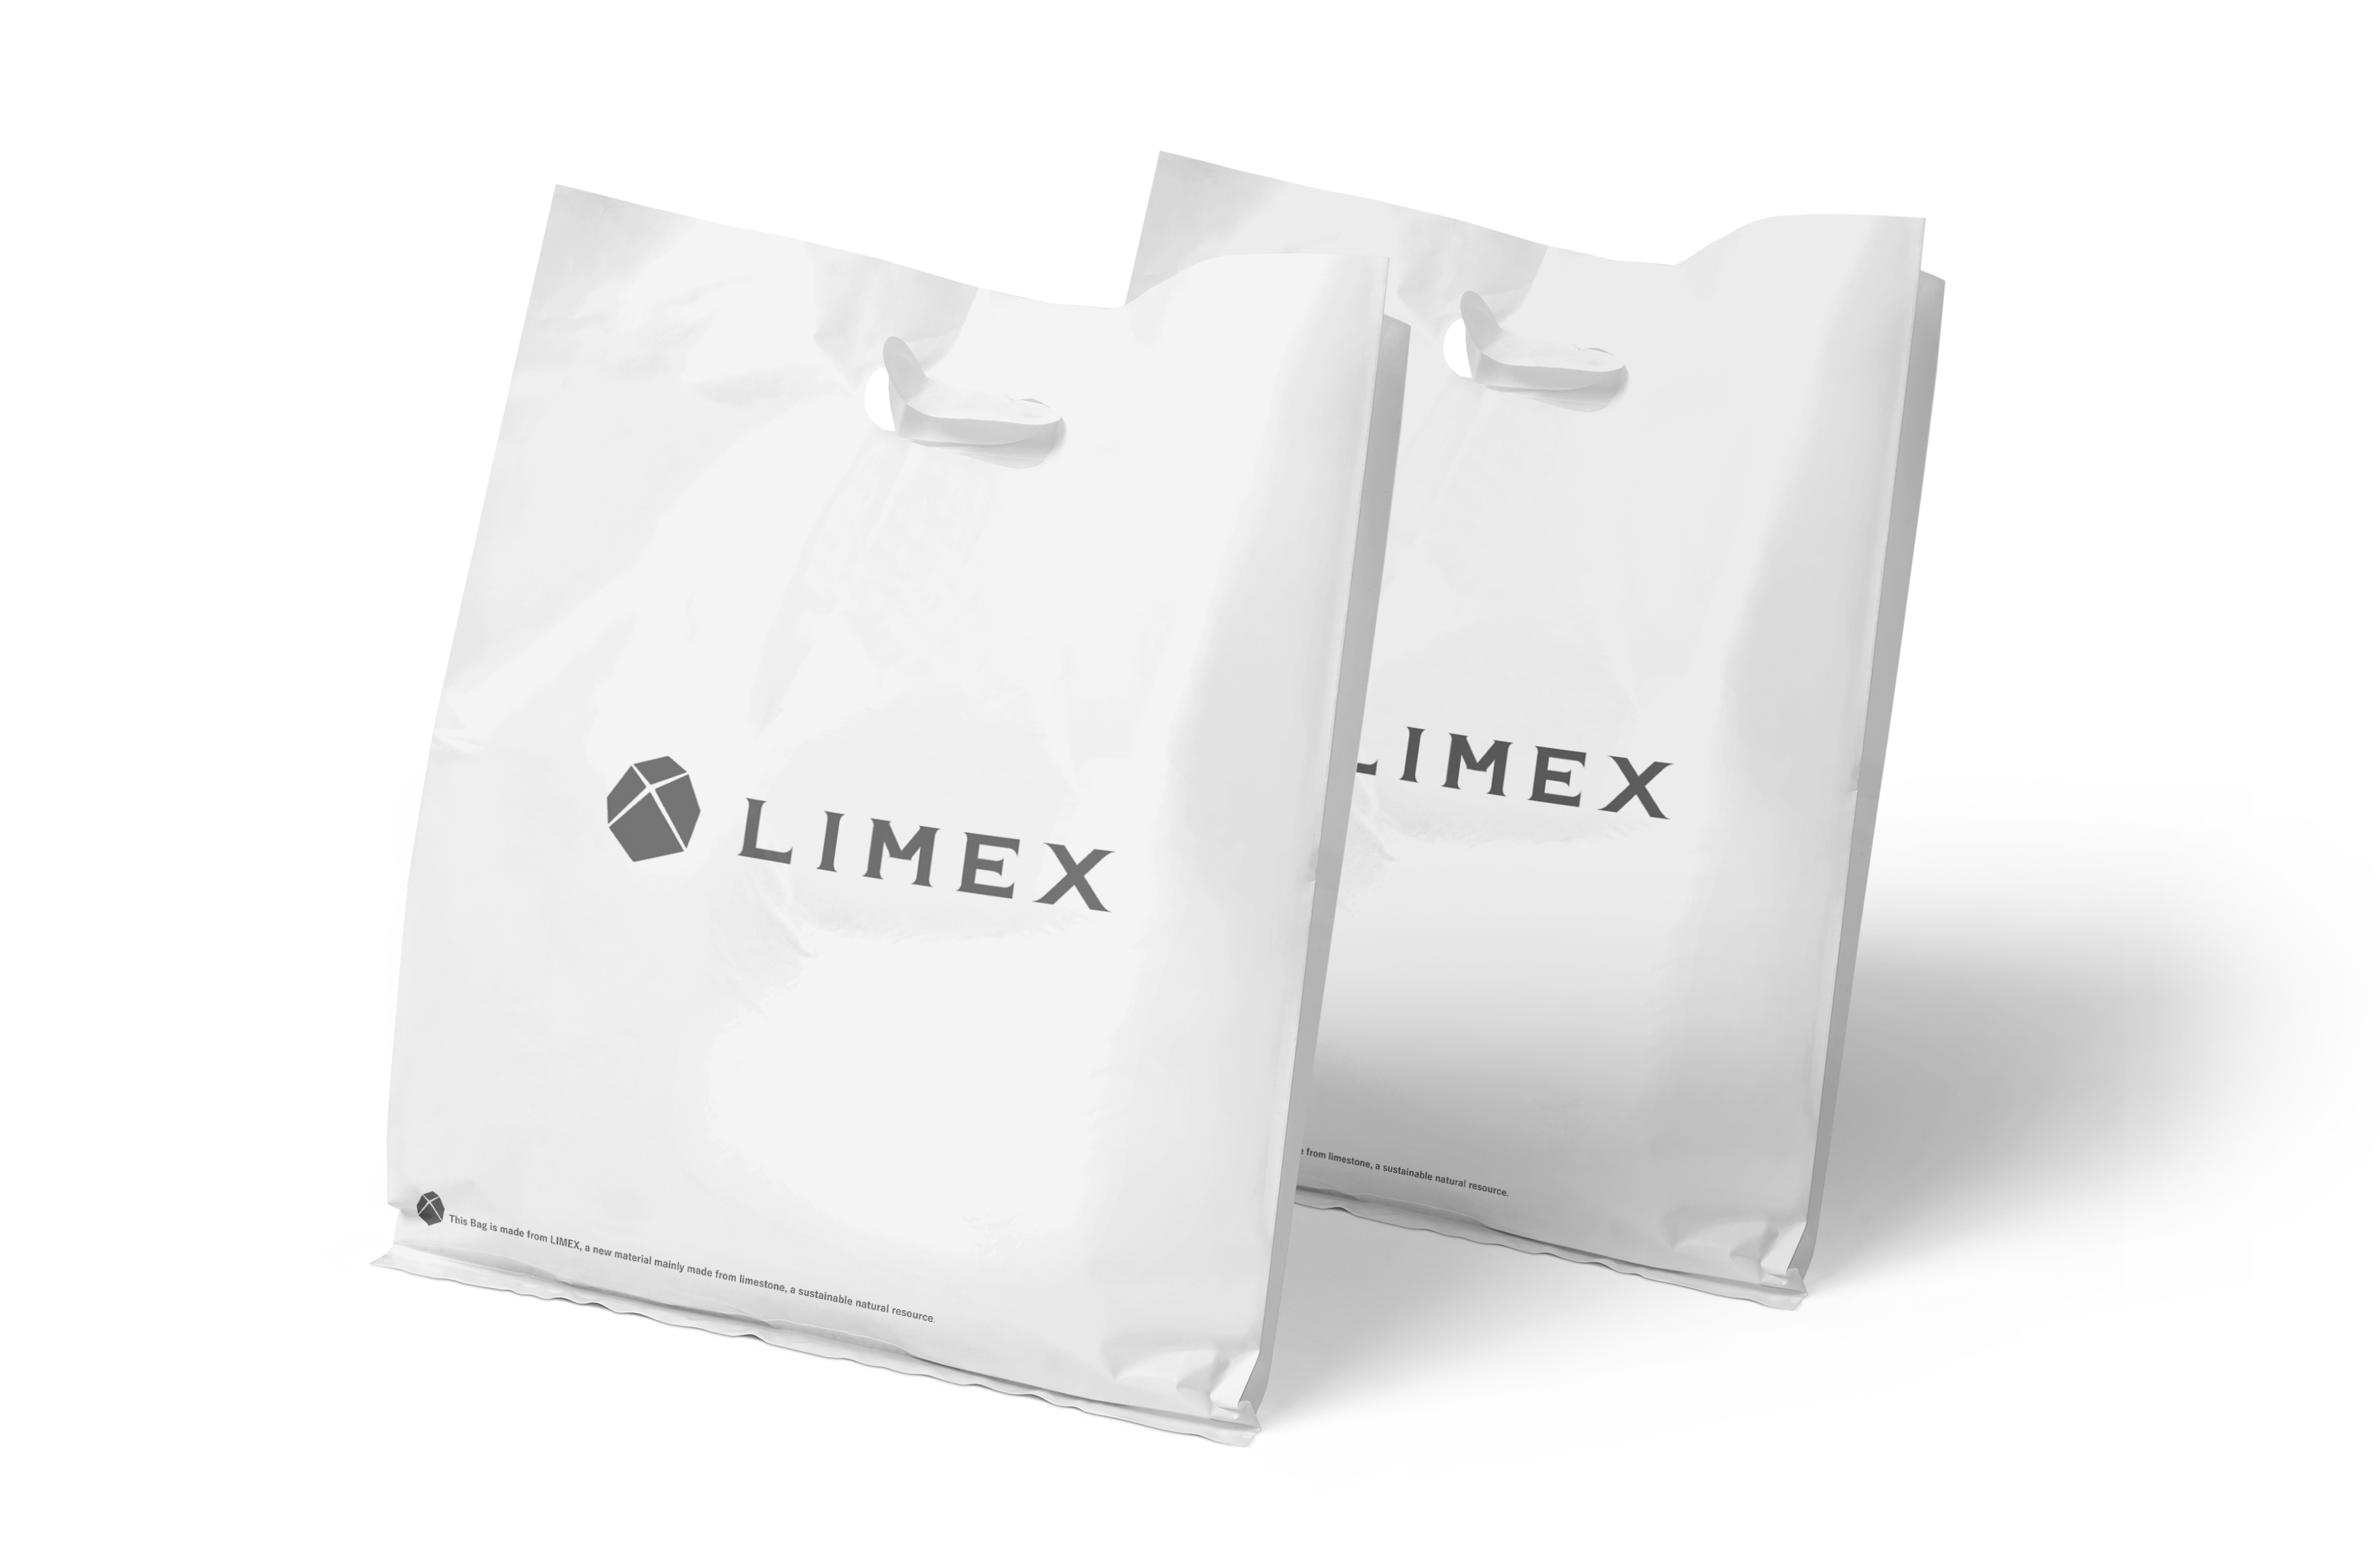 LIMEX Bag。ビニール袋でも紙袋でもない。石から生まれた新しい袋